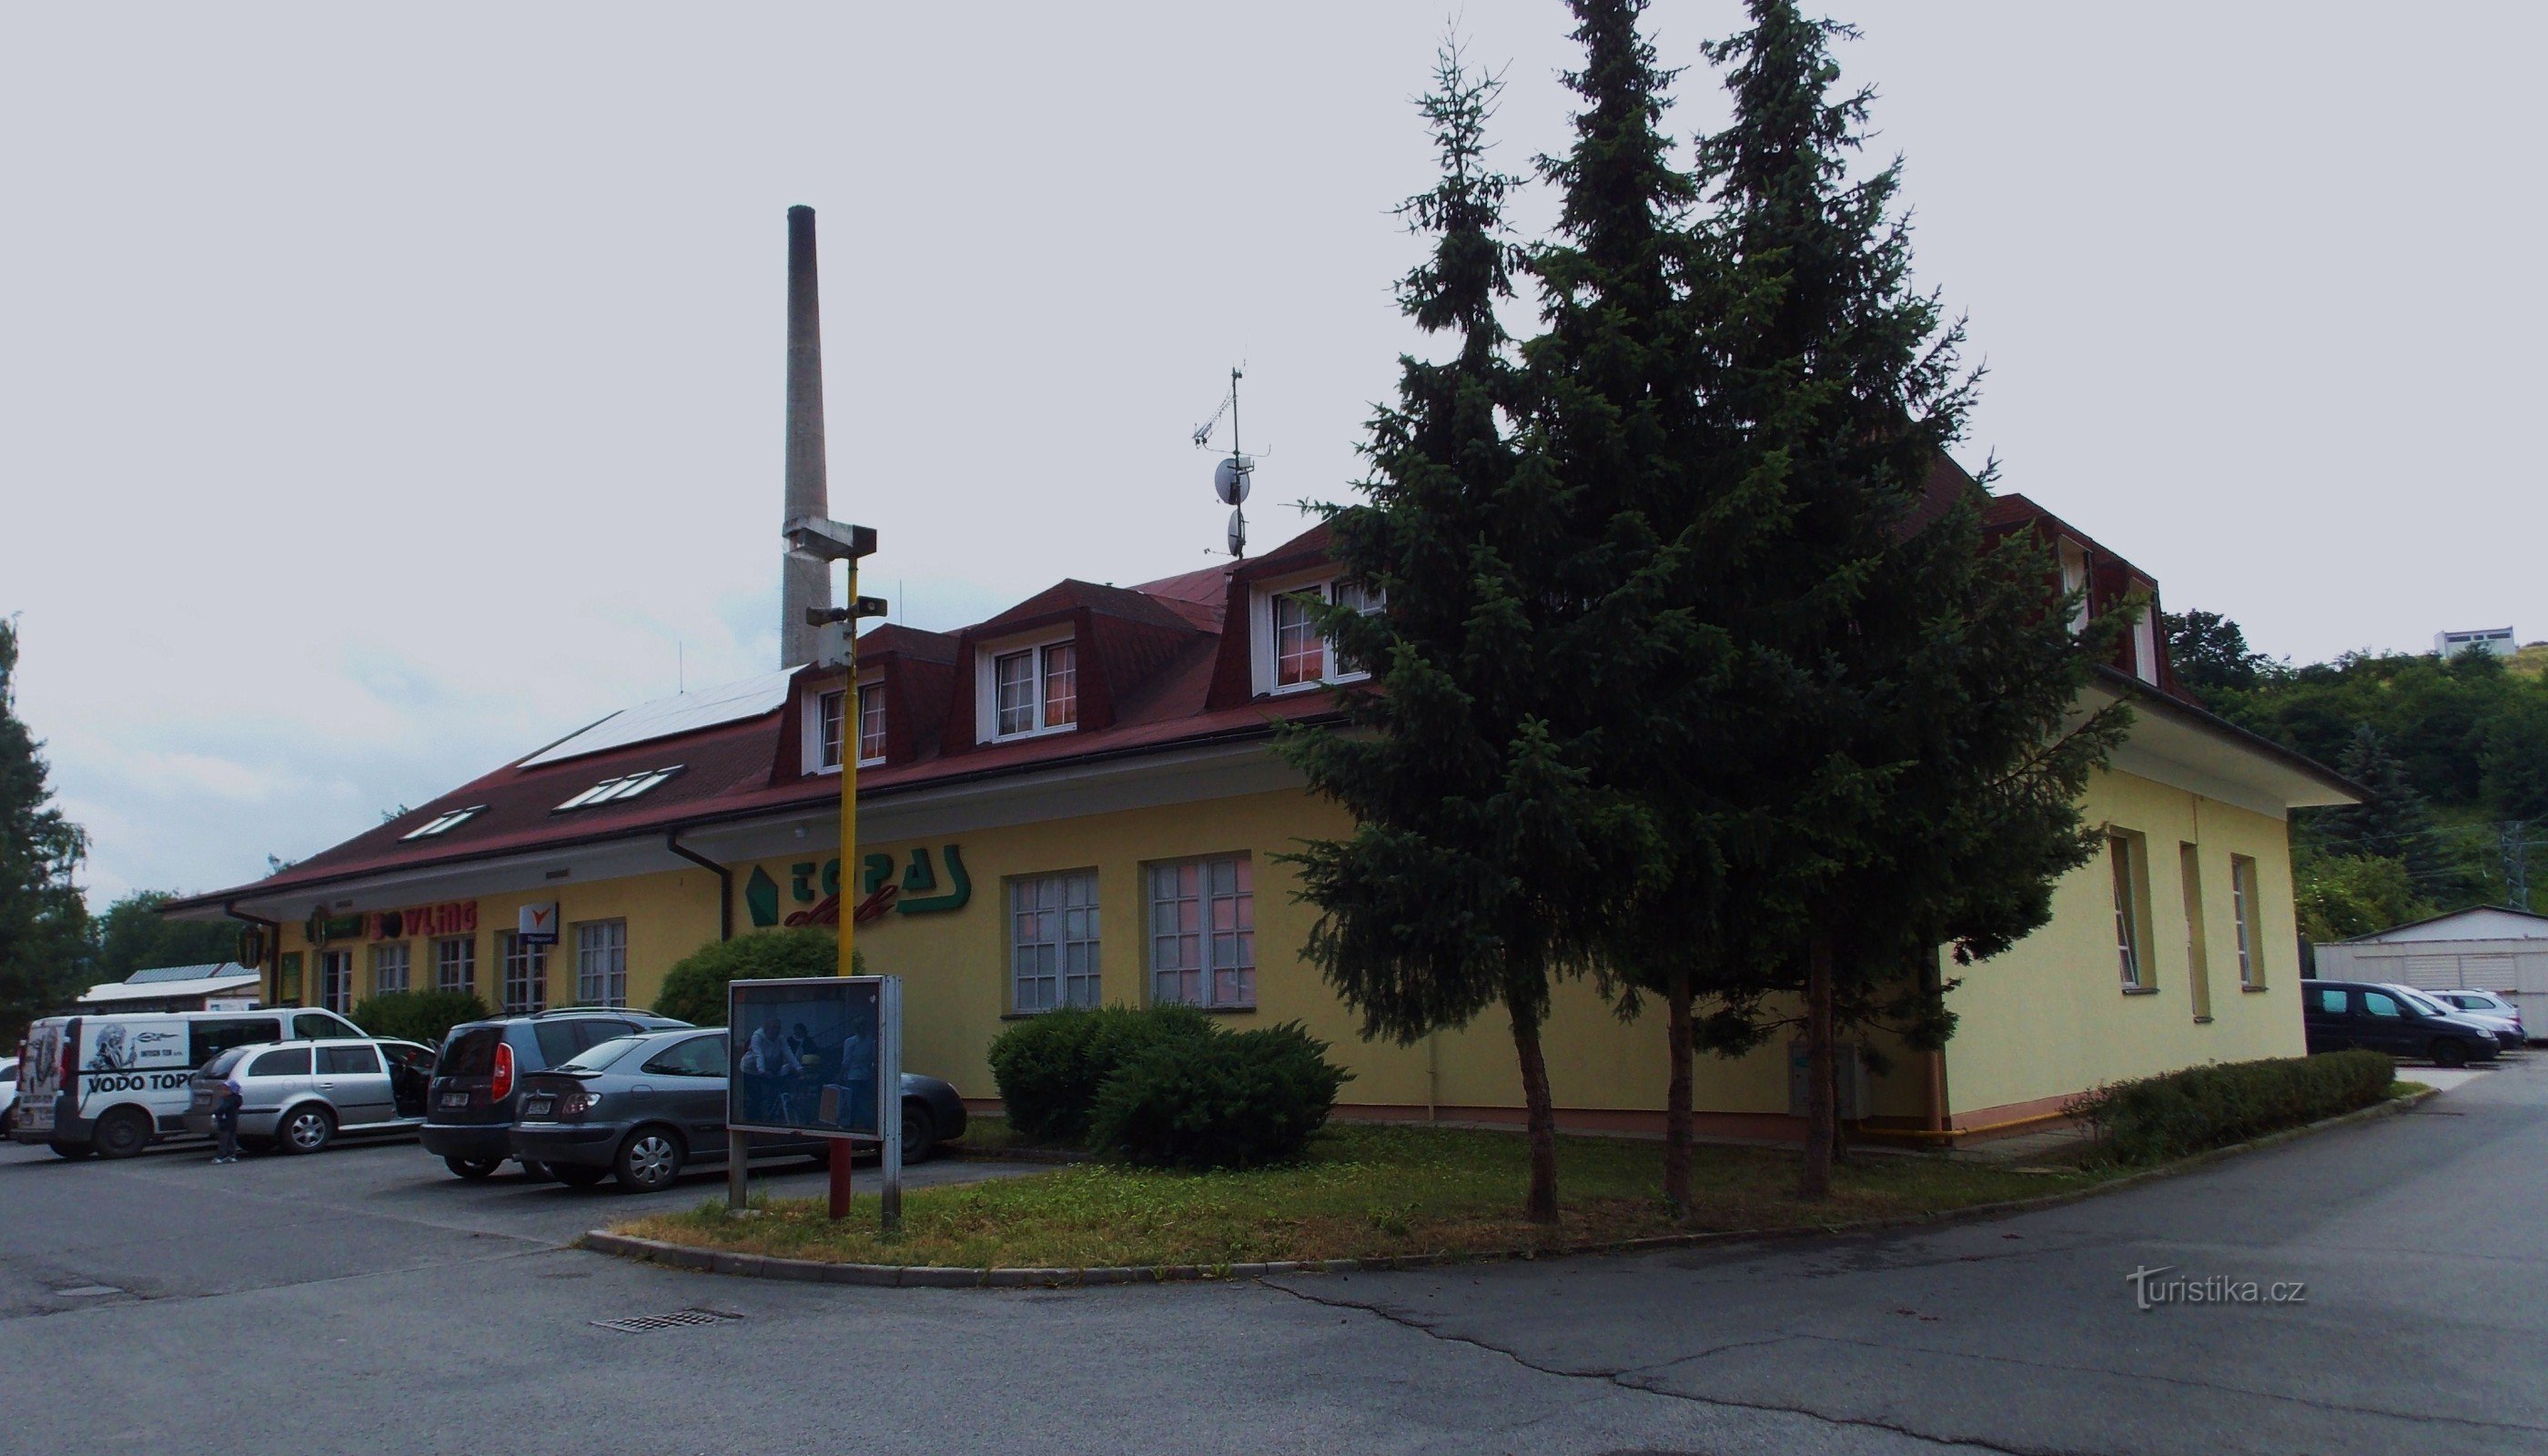 Topas Club στο Brumov - Bylnice